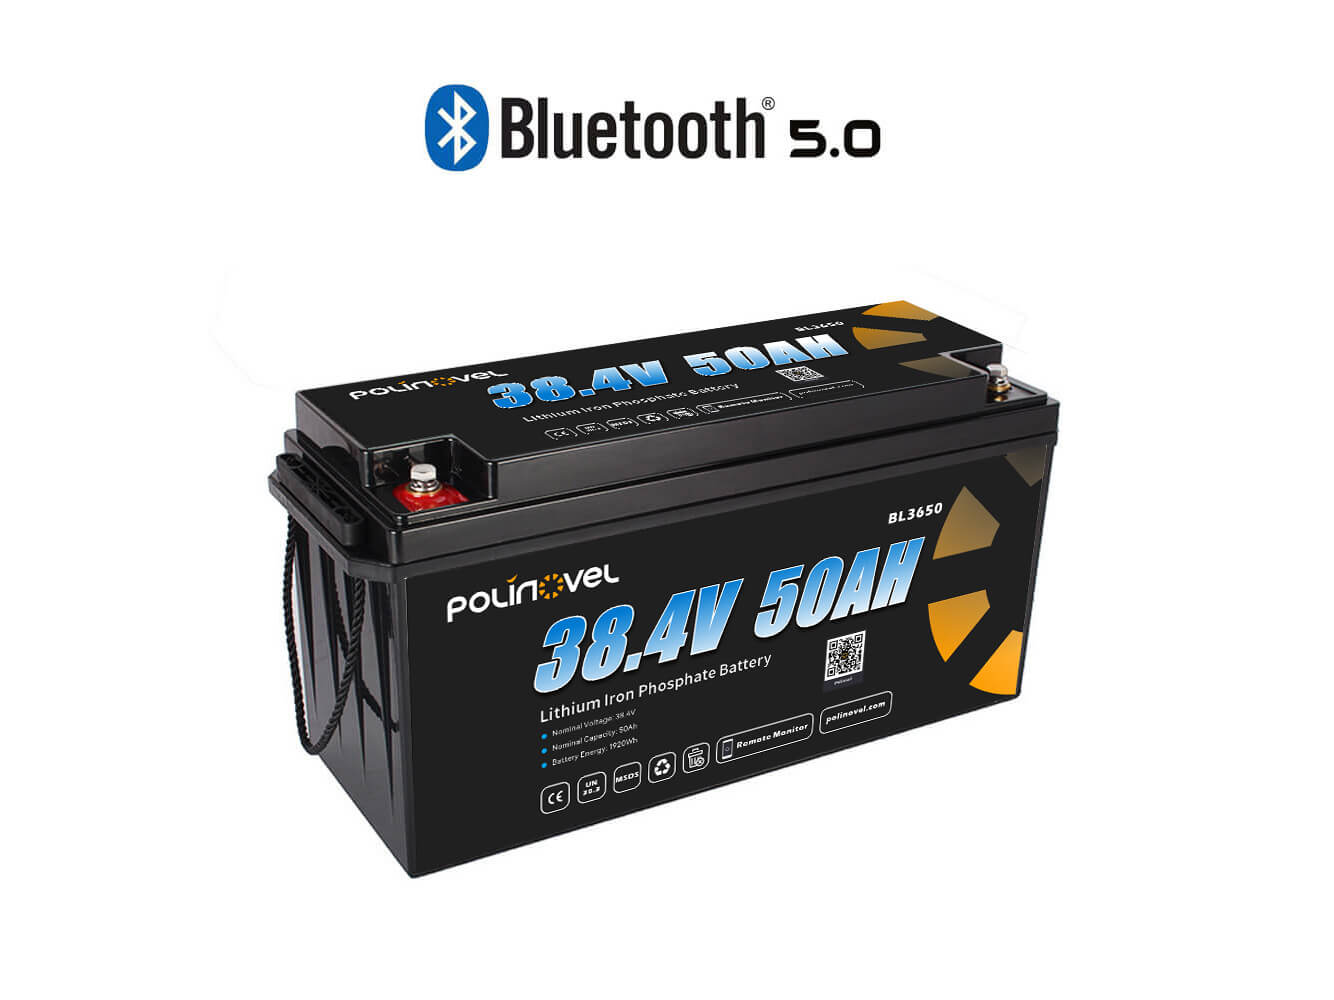 Polinovel 36V 50AH Bluetooth lithium battery